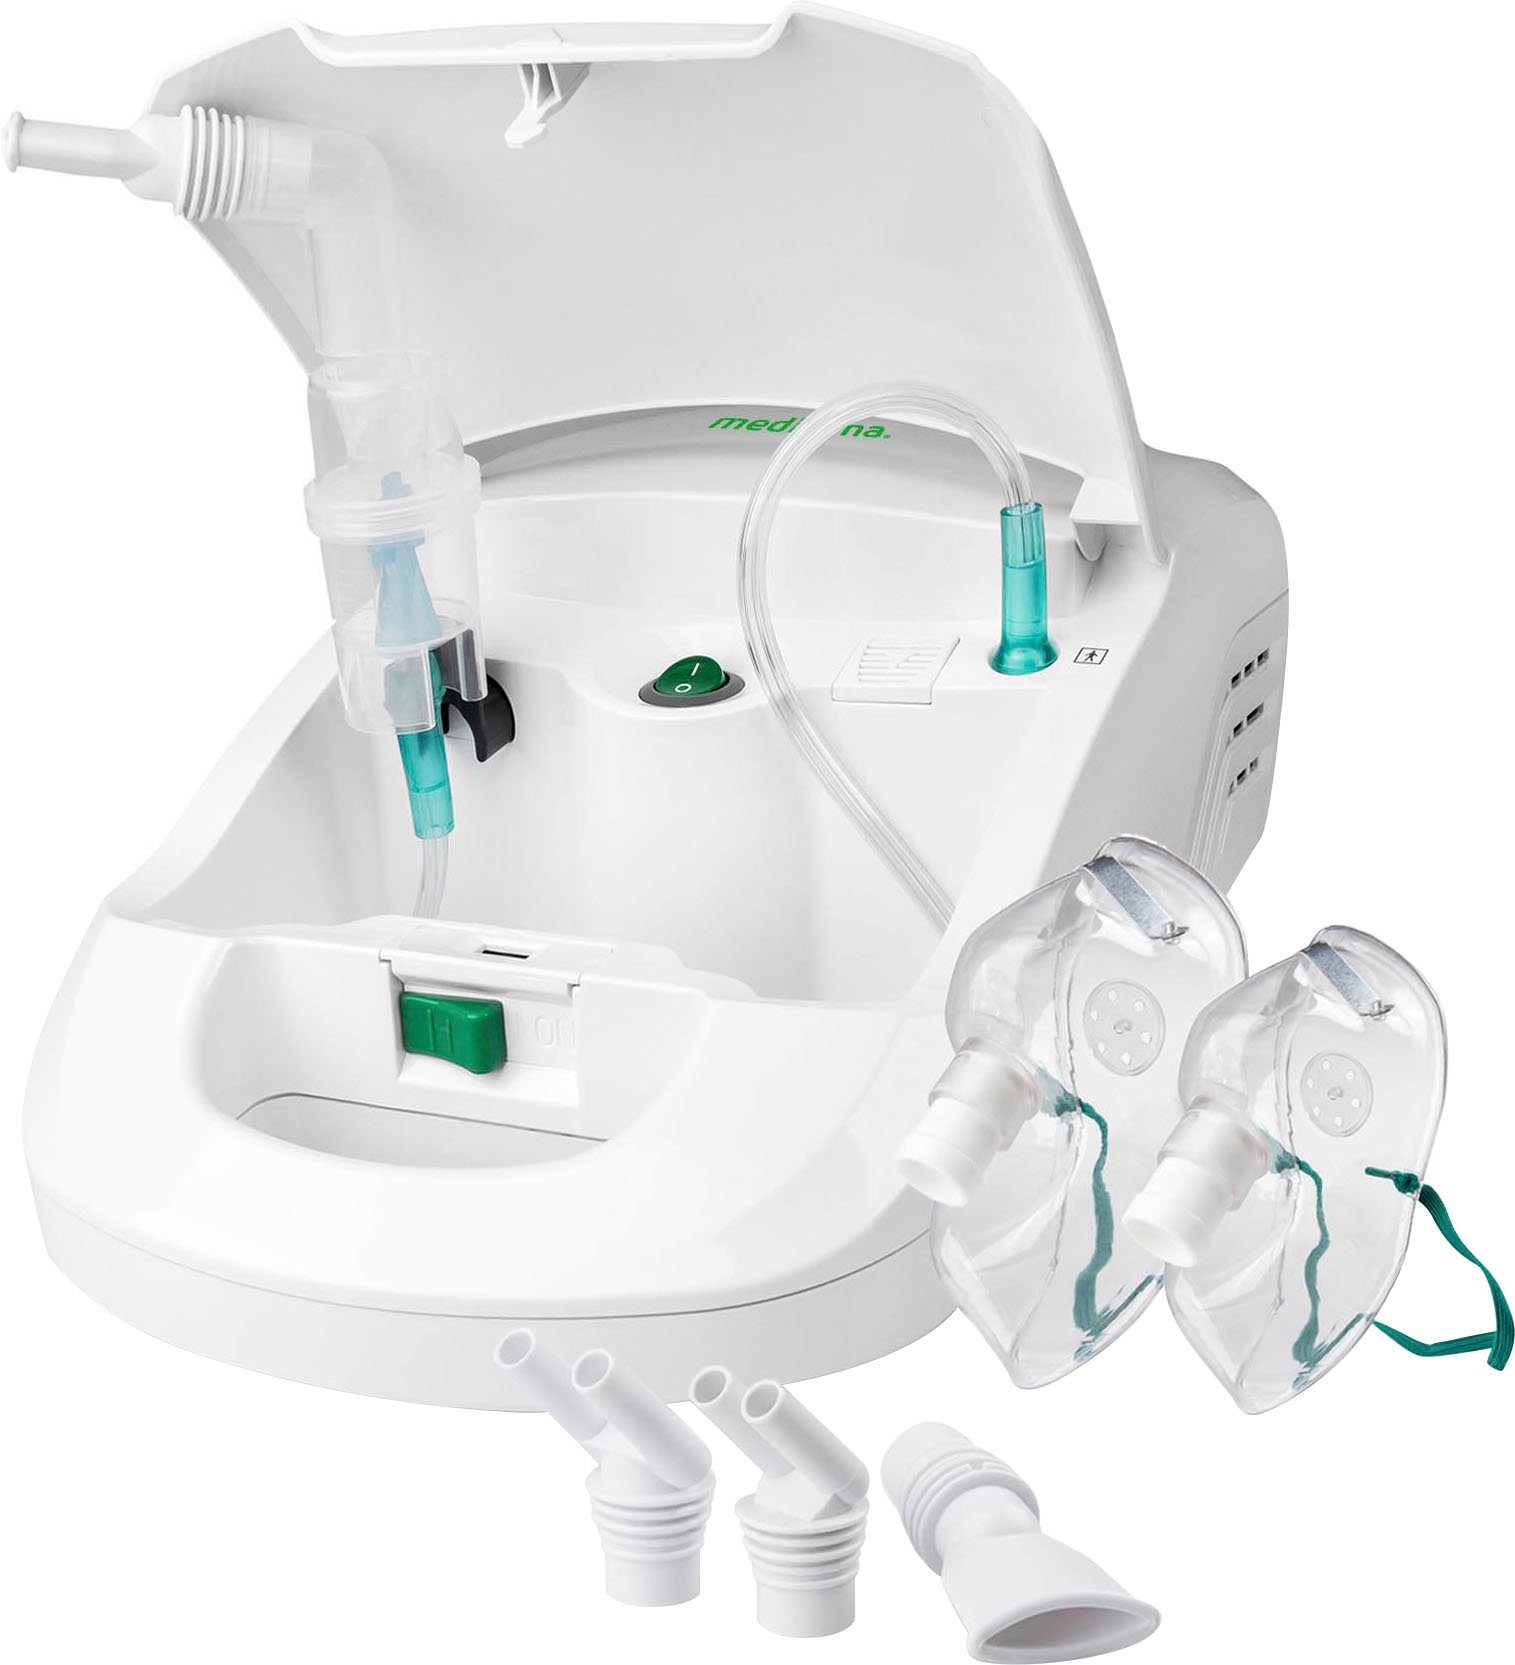 Medisana Inhalationsgerät IN550 Pro, Vernebelung mit Kompressor- Drucklufttechnologie